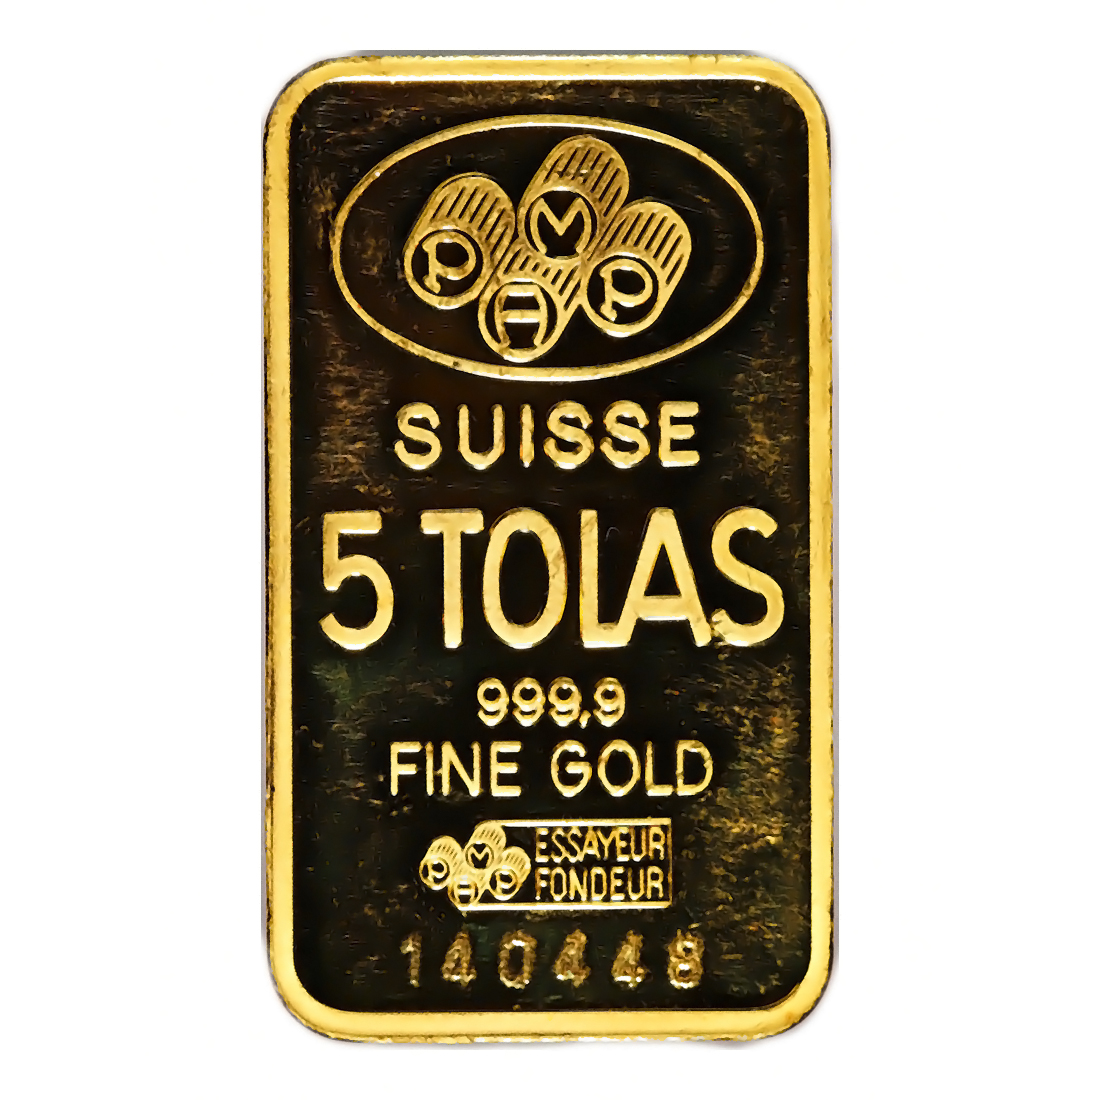 Pamp Suisse 5 Tolas Gold Bar 1.875 oz.